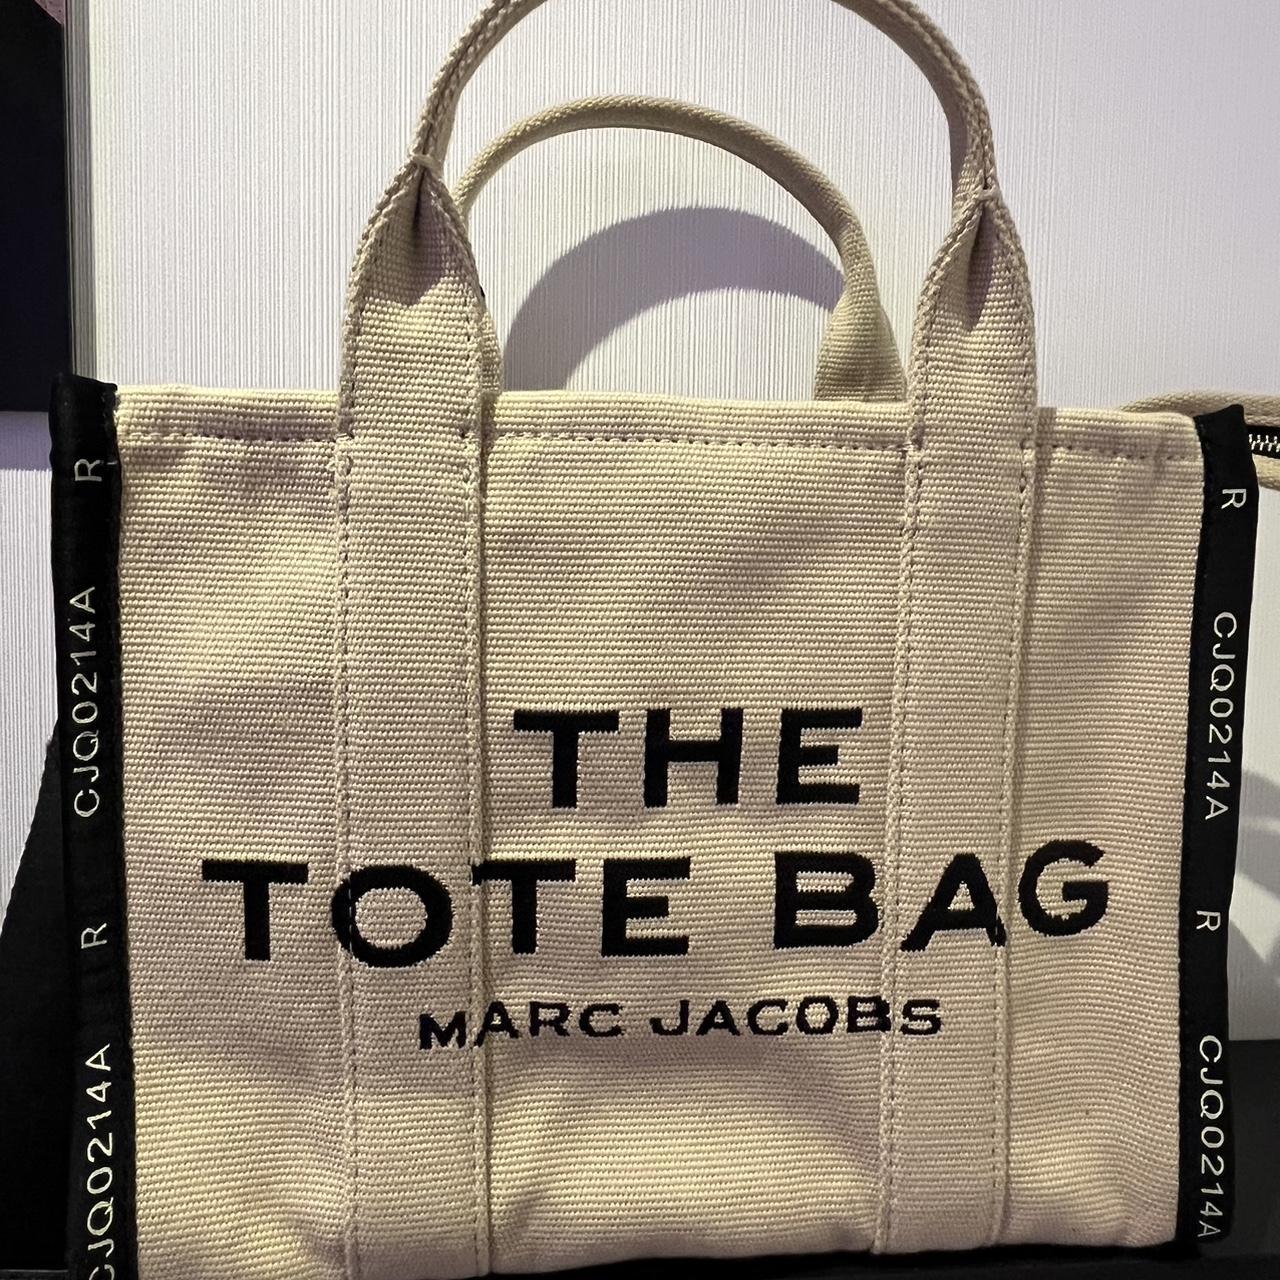 Marc jacobs the tote bag original Receipt - Depop